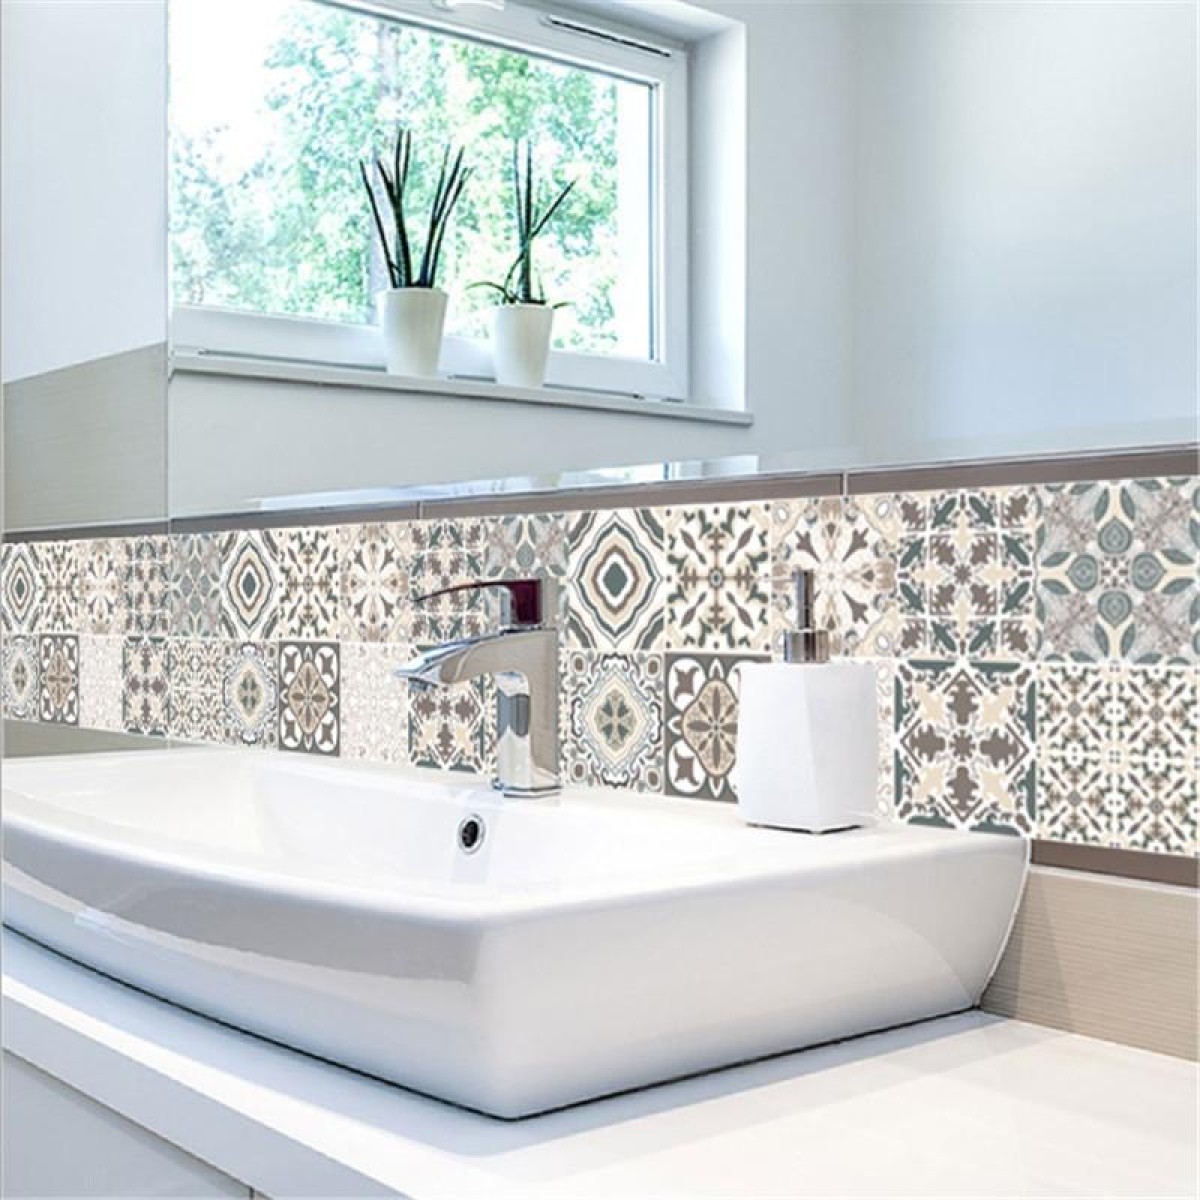 2 PCS Retro Tile Stickers Kitchen Bathroom PVC Self Adhesive Wall Stickers Living Room DIY Decor Wallpaper Waterproof Decoration, Style: Laminating(MZ039 D)